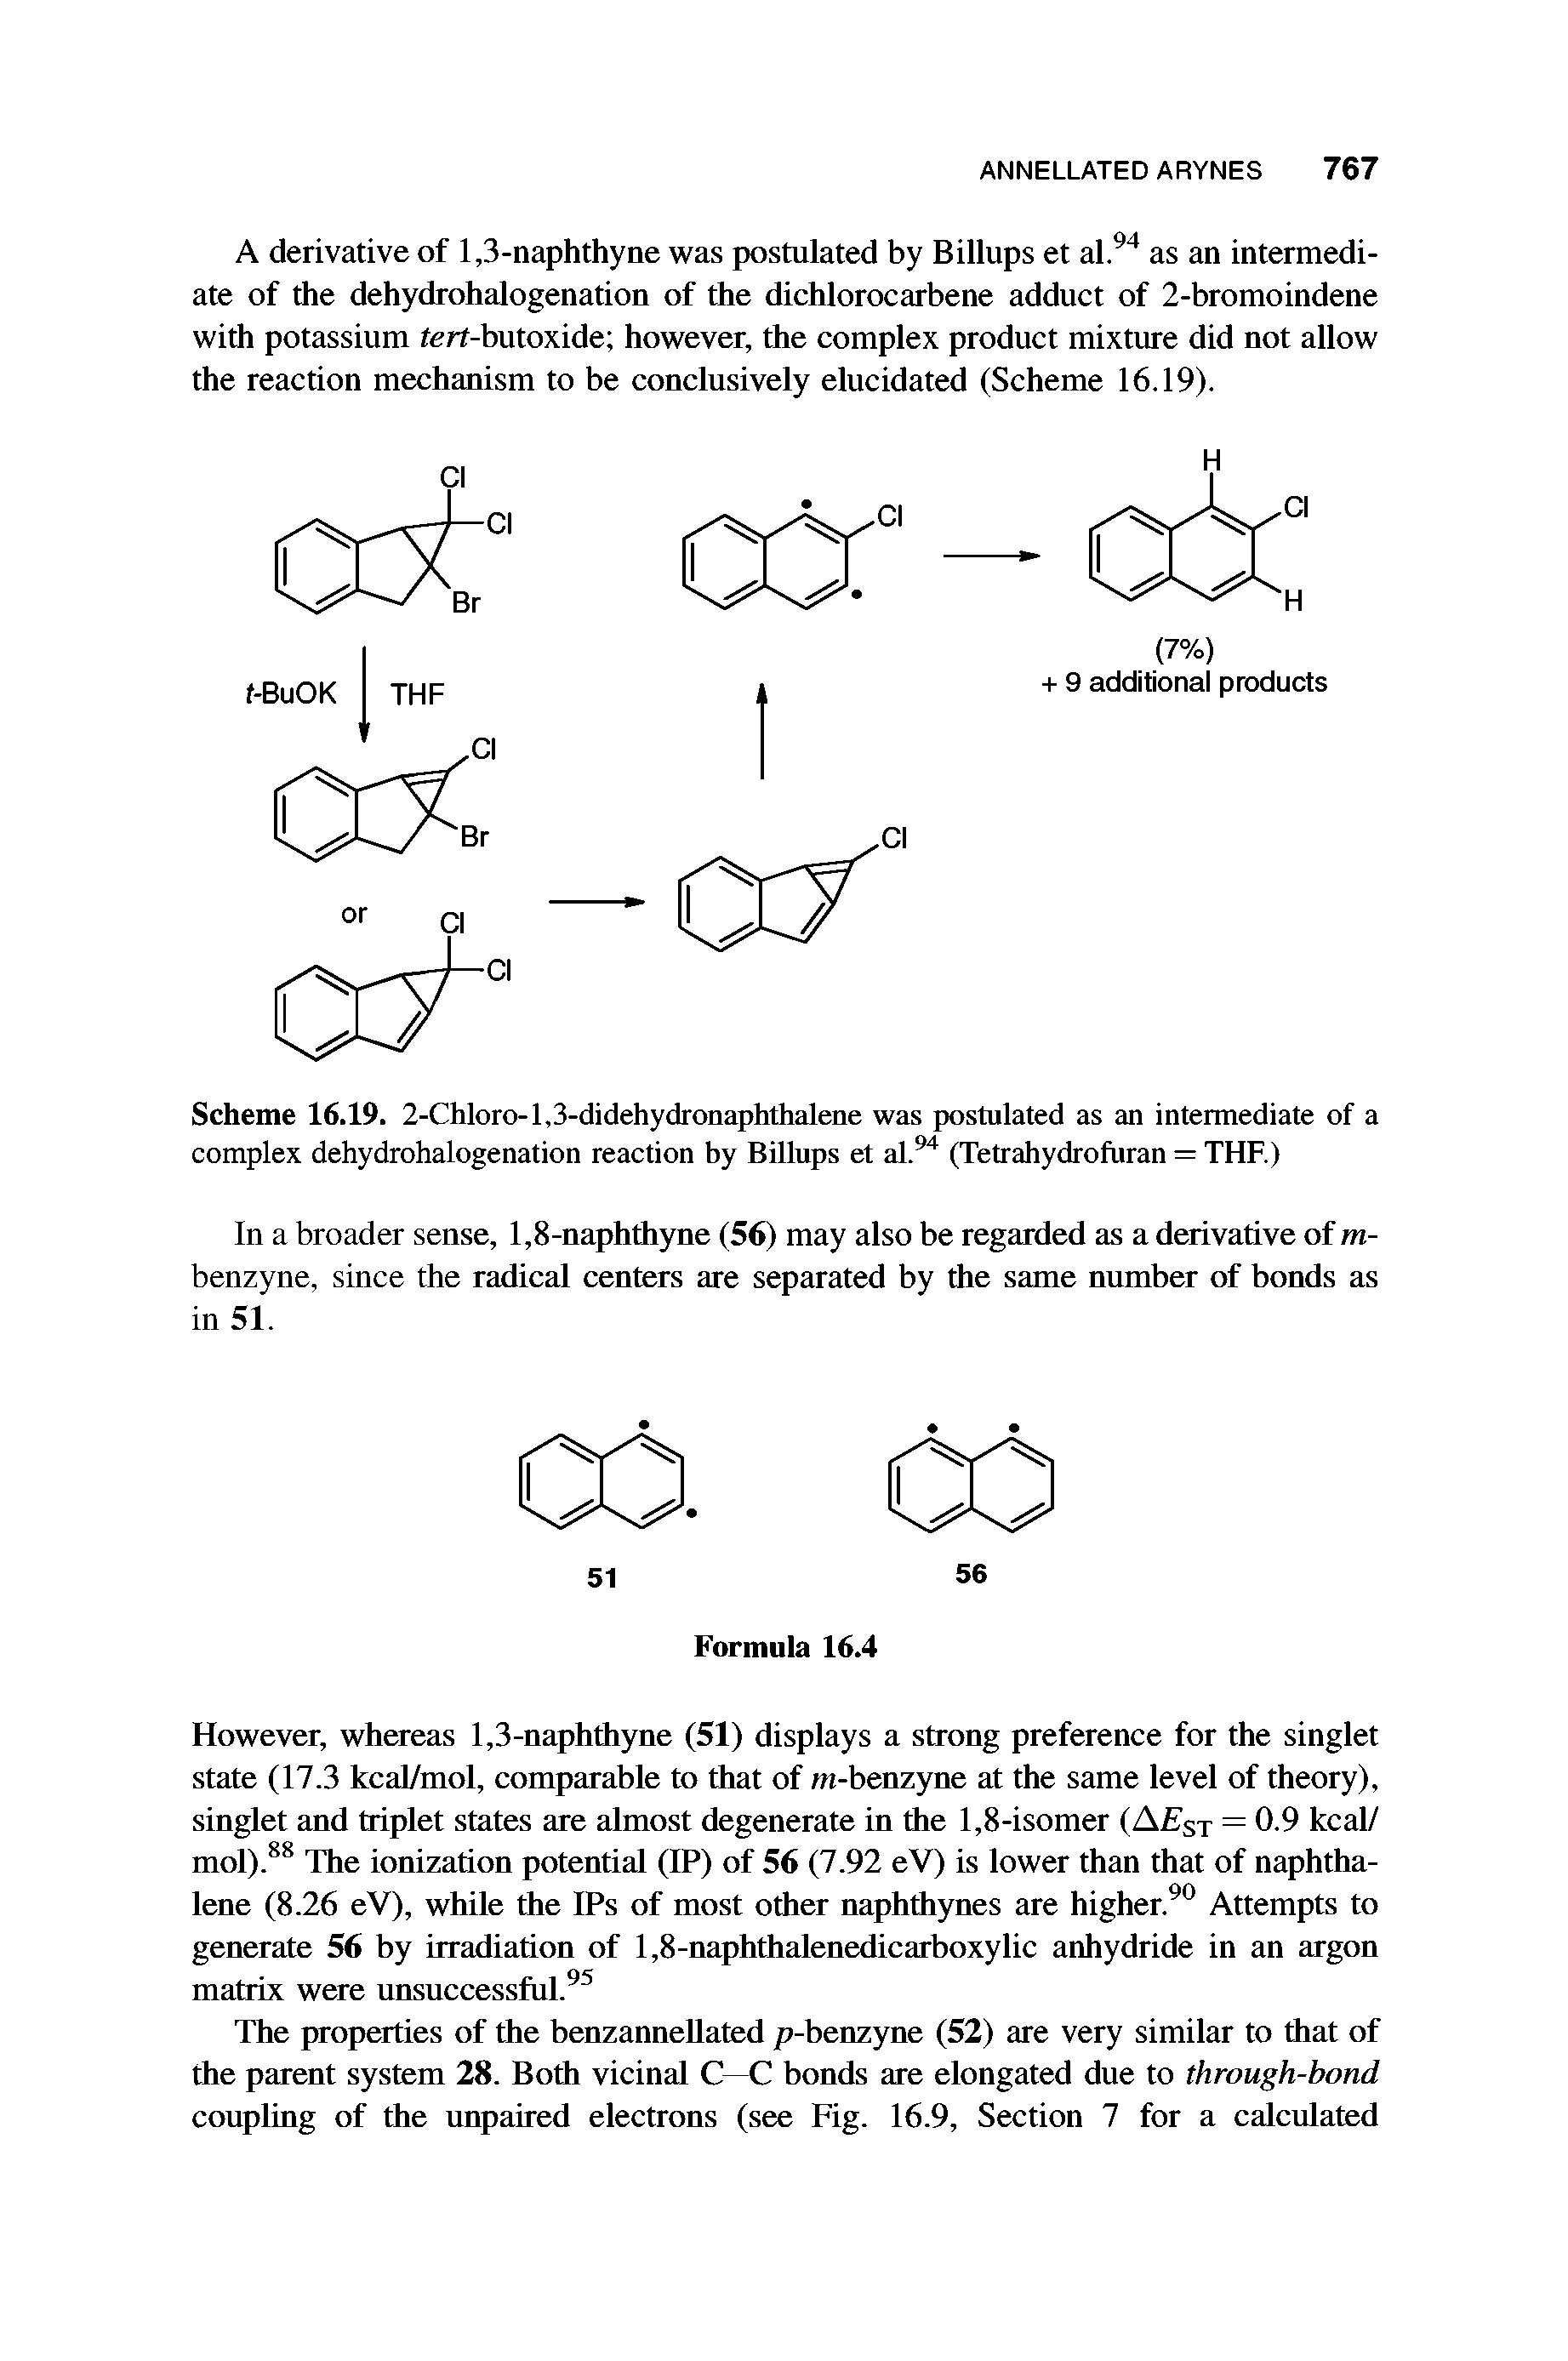 Scheme 16.19. 2-Chloro-l,3-didehydronaphthalene was postulated as an intermediate of a complex dehydrohalogenation reaction by Billups et al. (Tetrahydrofuran = THE)...